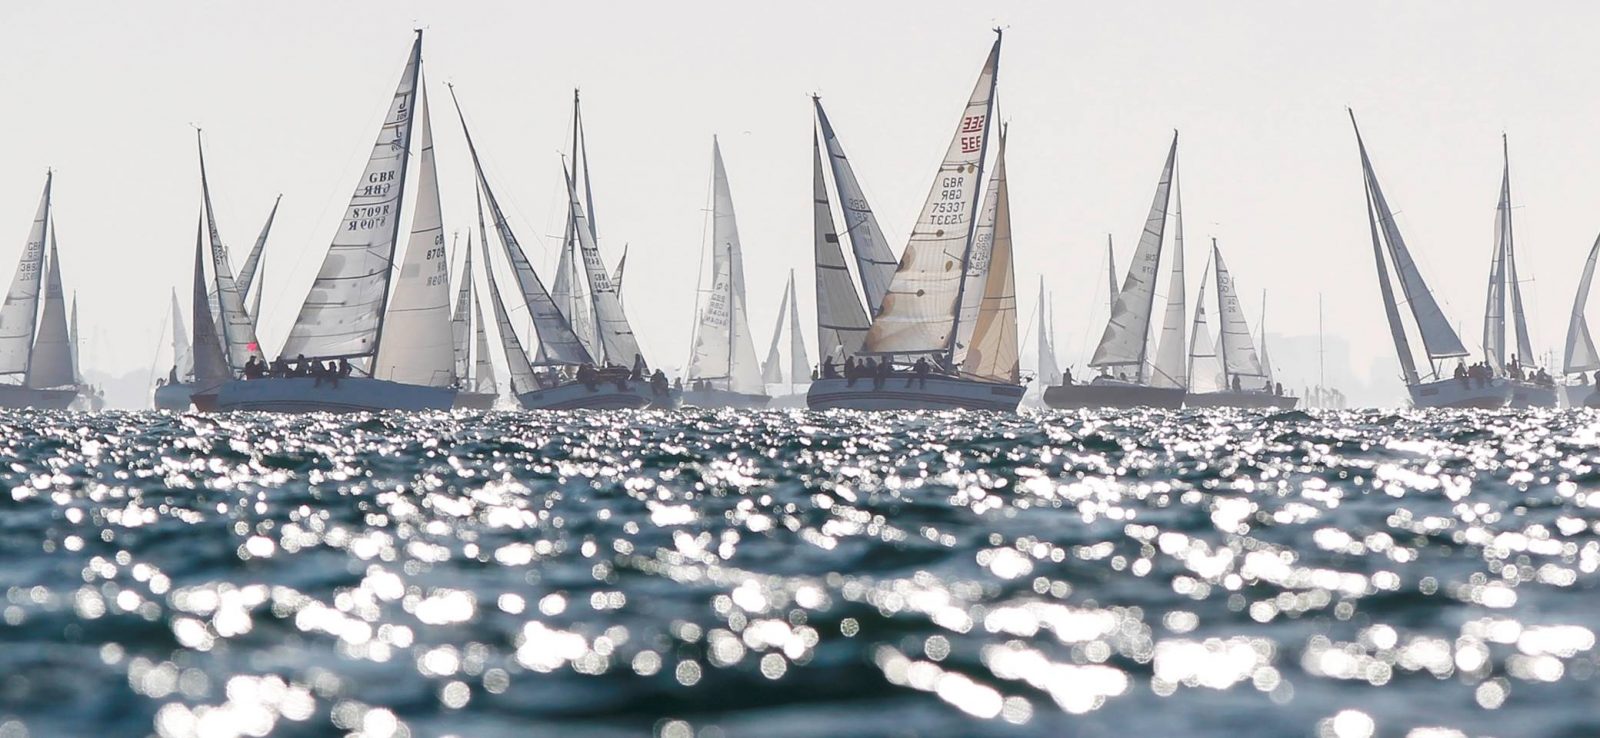 Britannia Corporate Sailing Events - Round the Island Racing